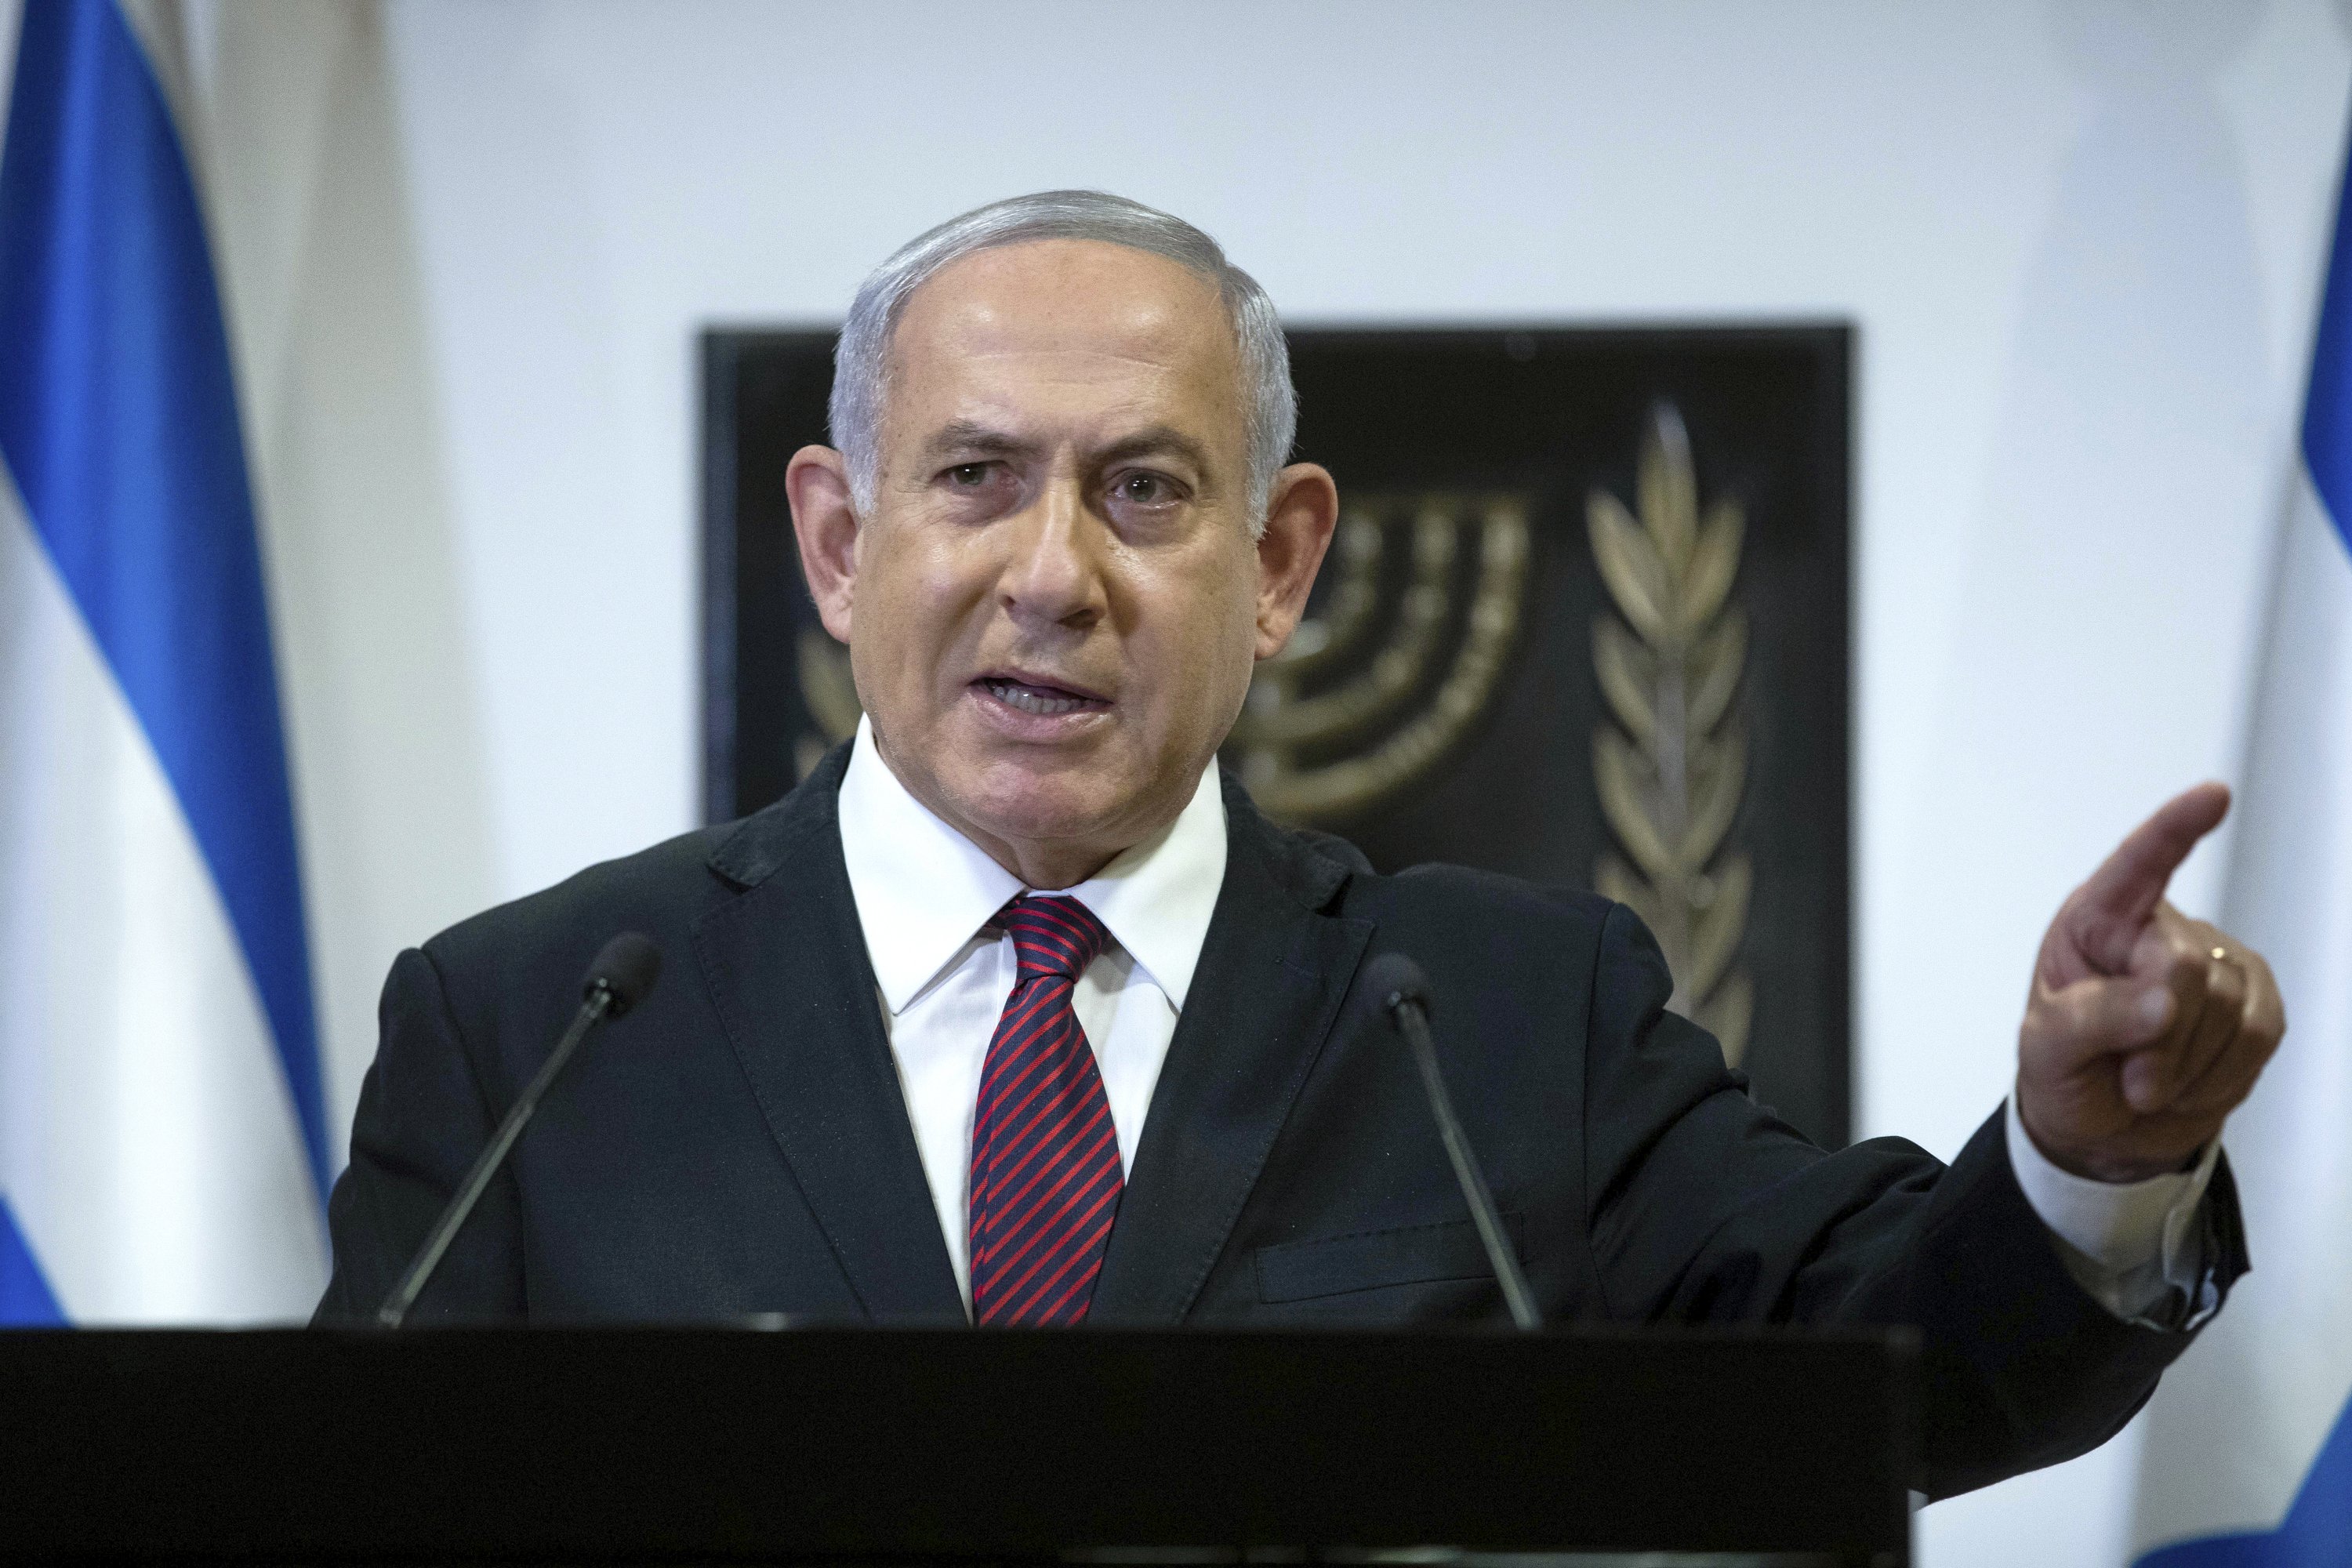 Israeli prosecutors explain the allegations against Netanyahu